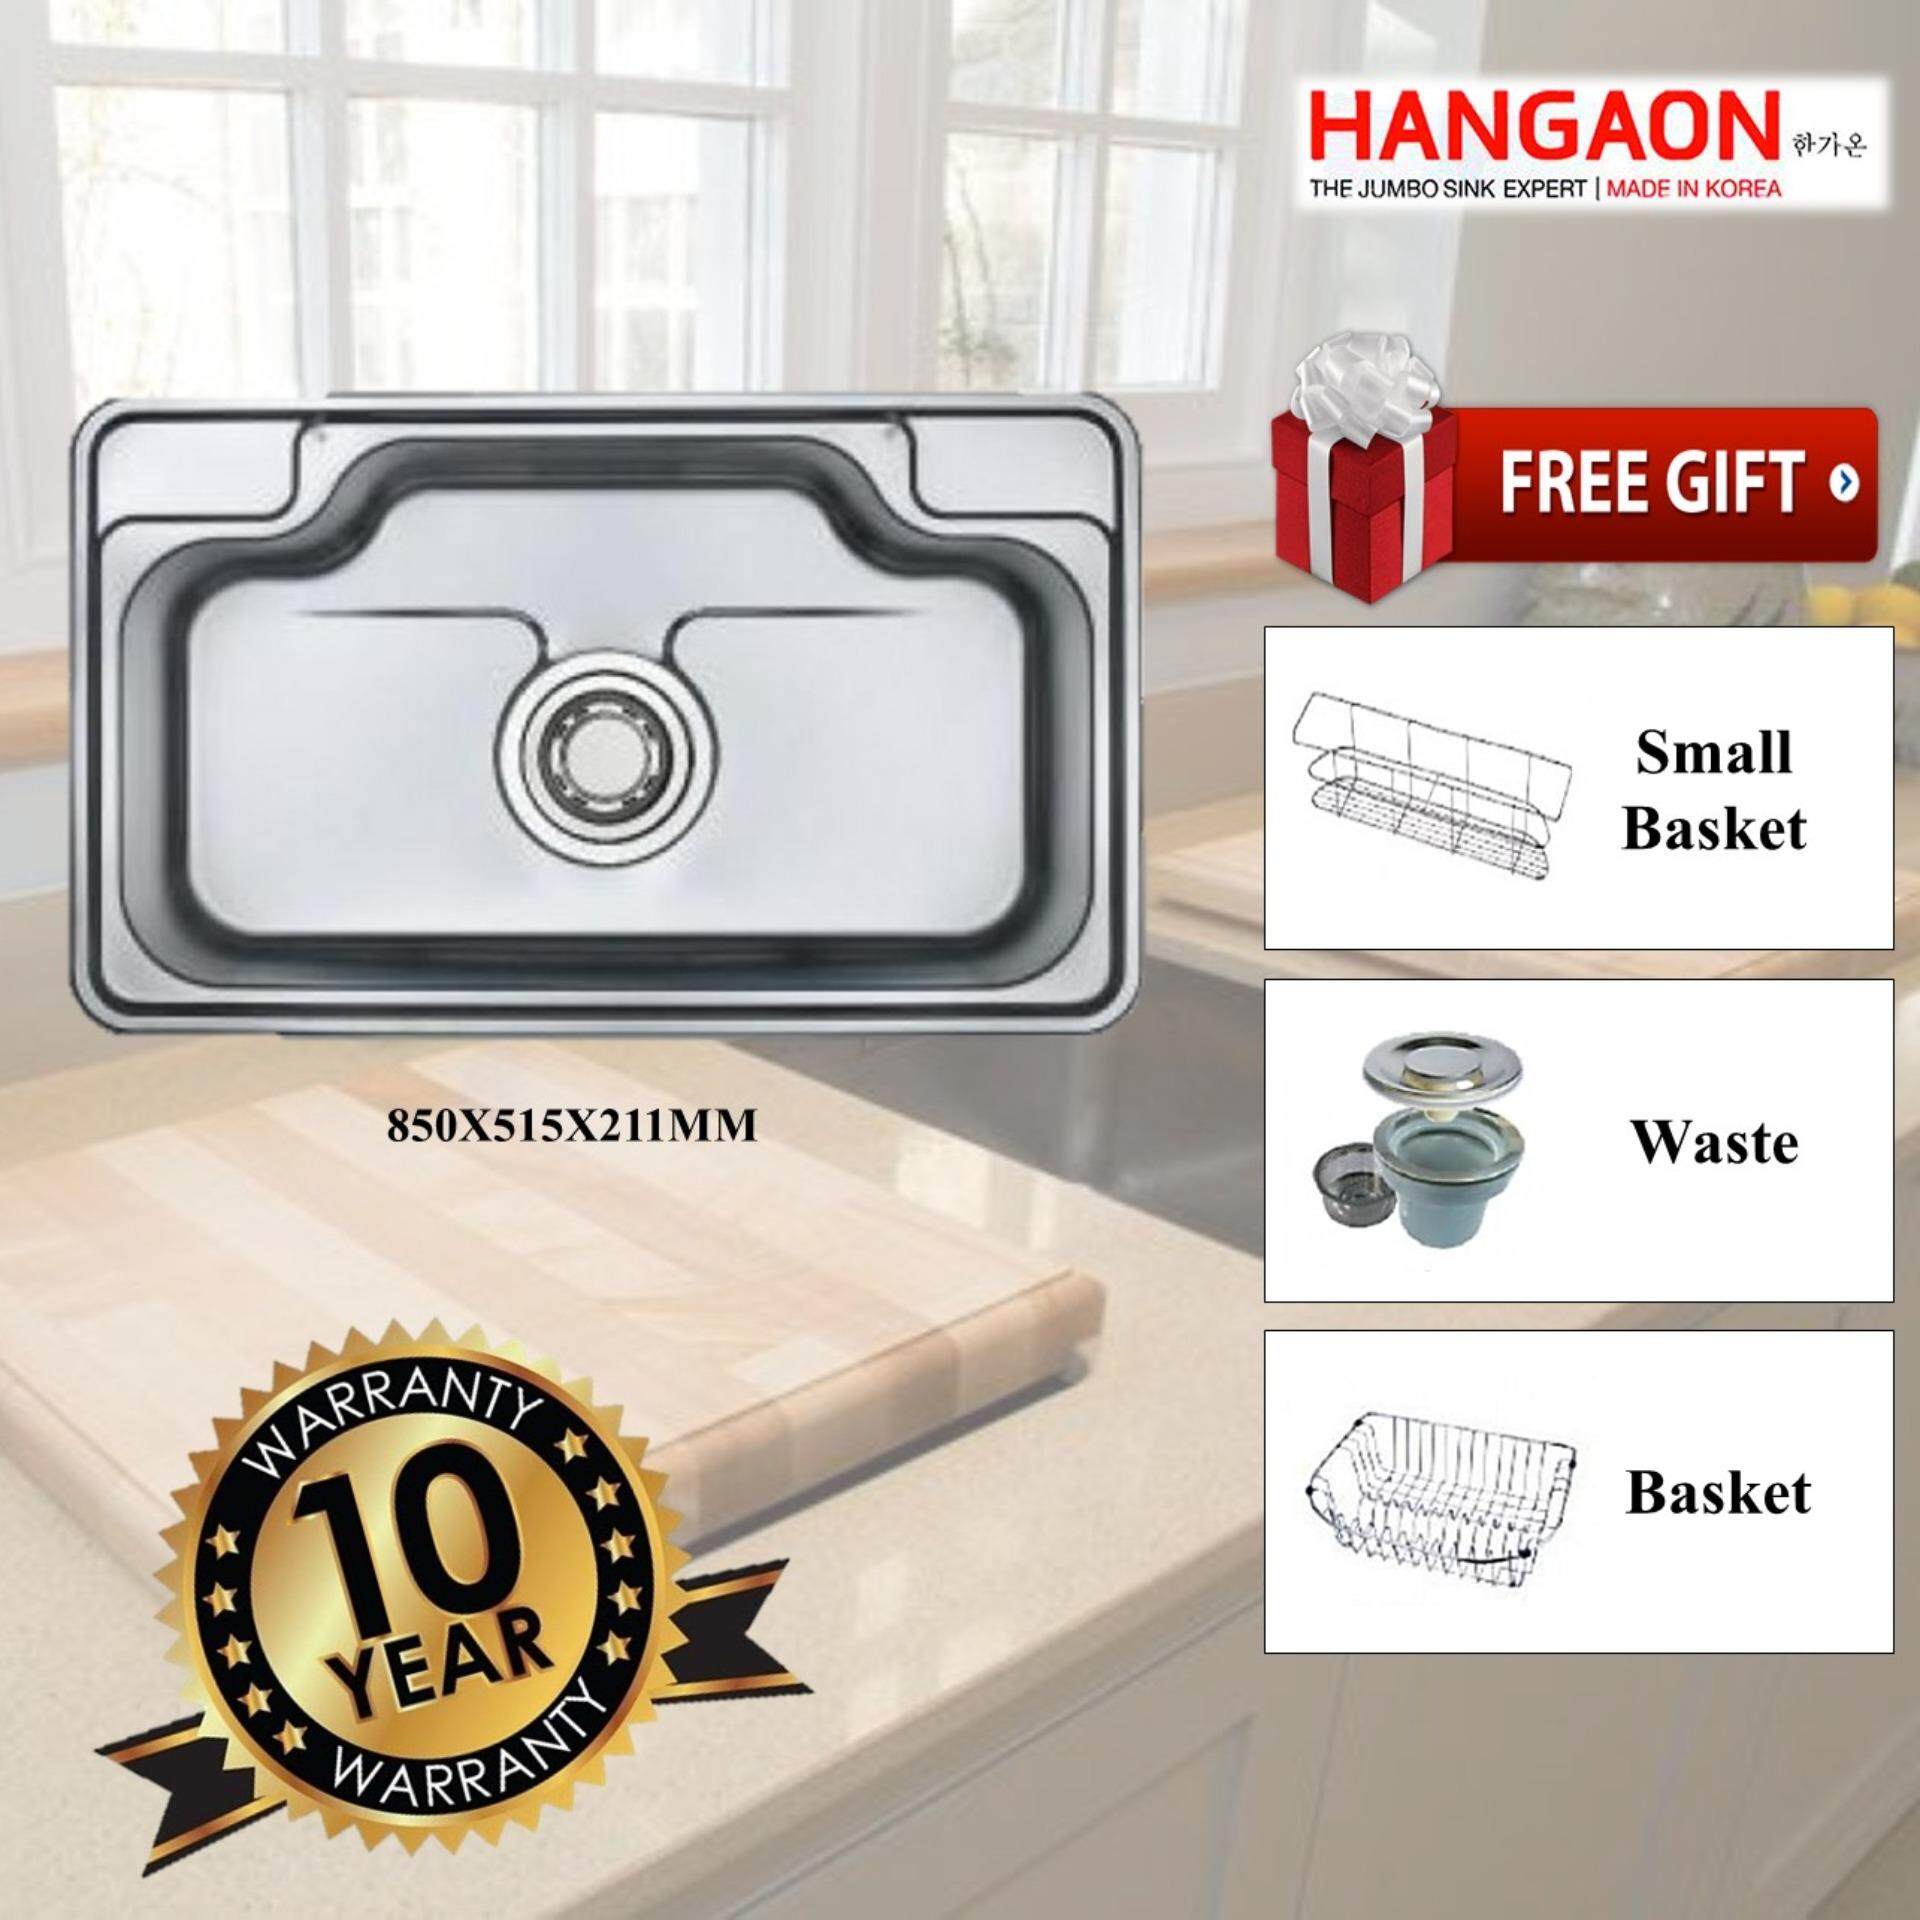 HANGAON High Quality LS850 Jumbo Single Bowl Sink (KOREA)